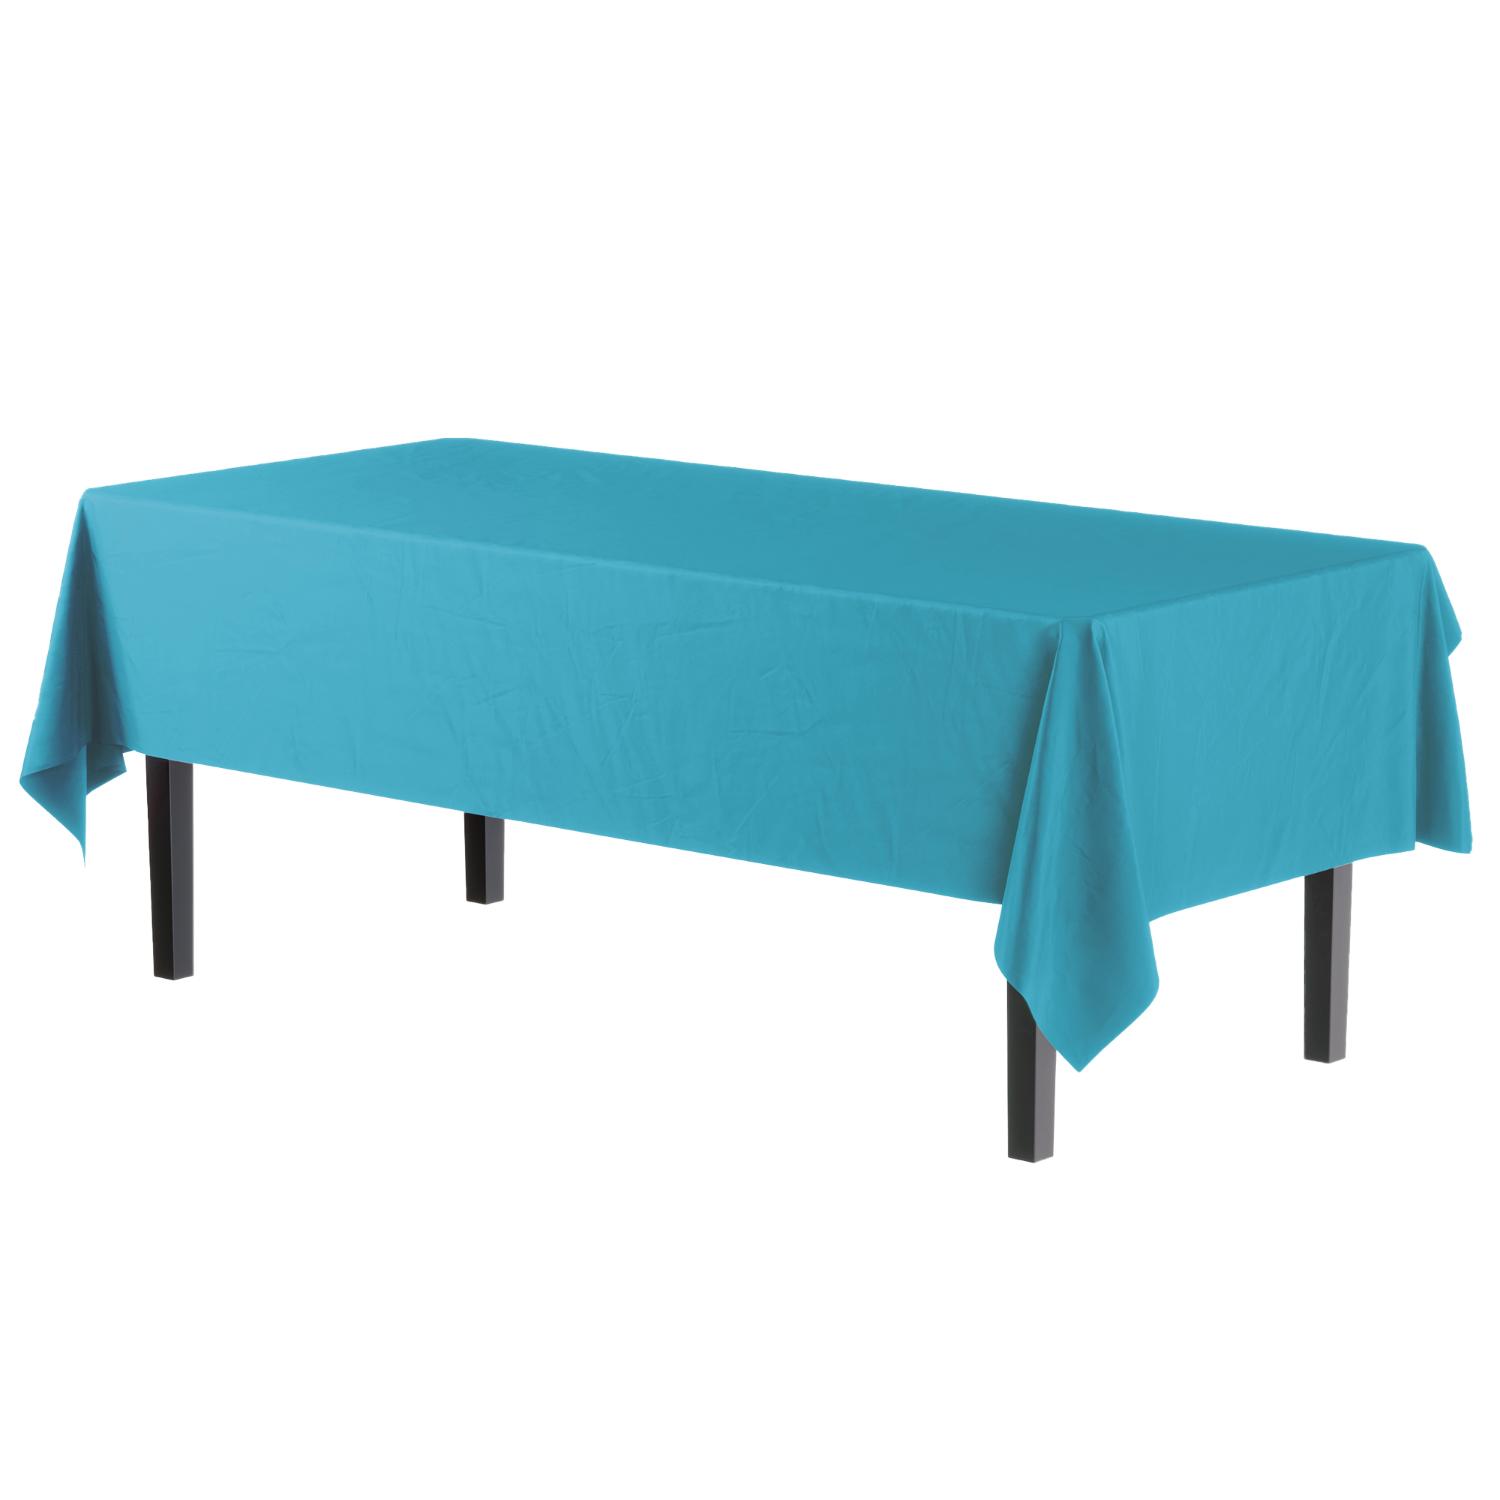 Premium Turquoise Table Cover - 96 Ct.